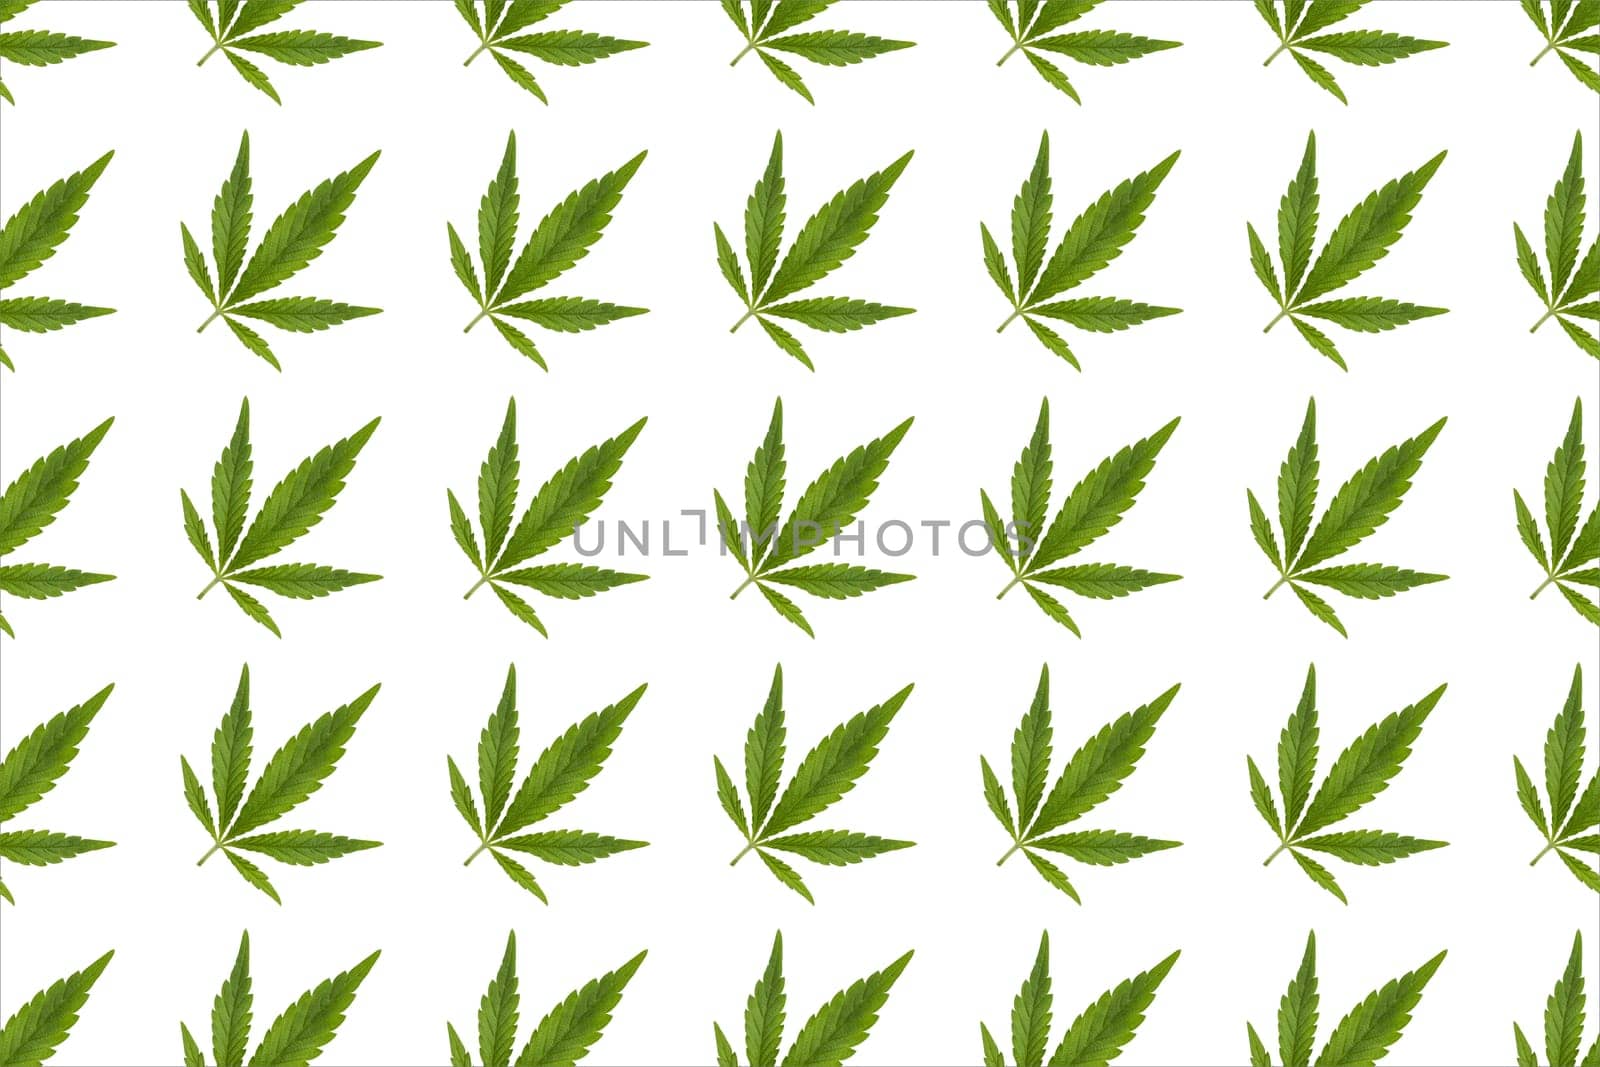 Green hemp leaves on white background. Cannabis green leaves on a white background.